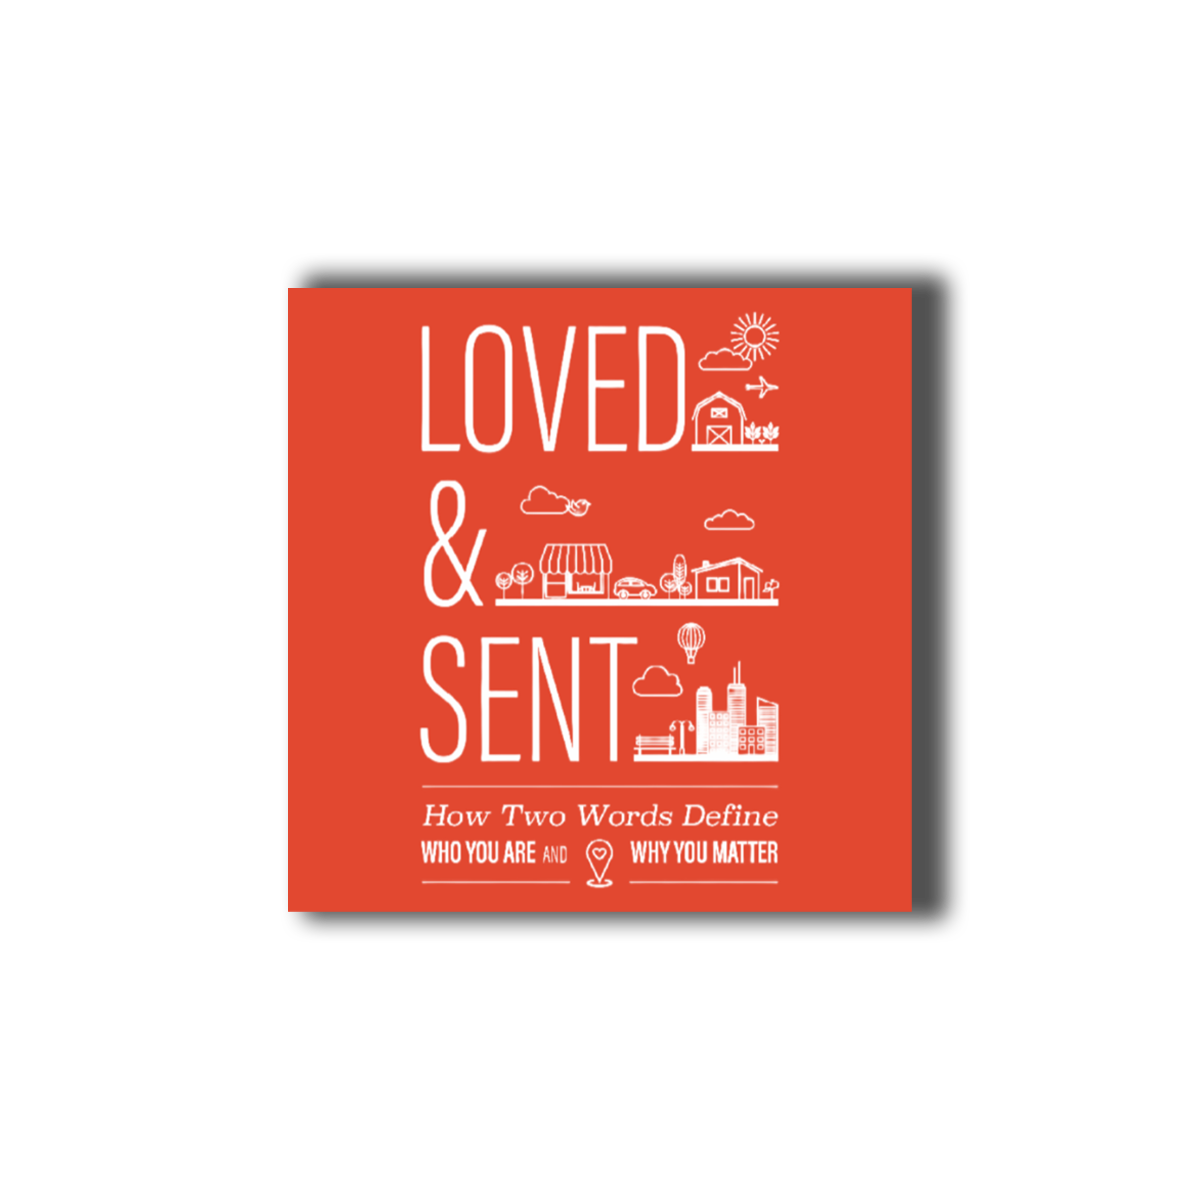 Loved & Sent: A Church Discipleship Program